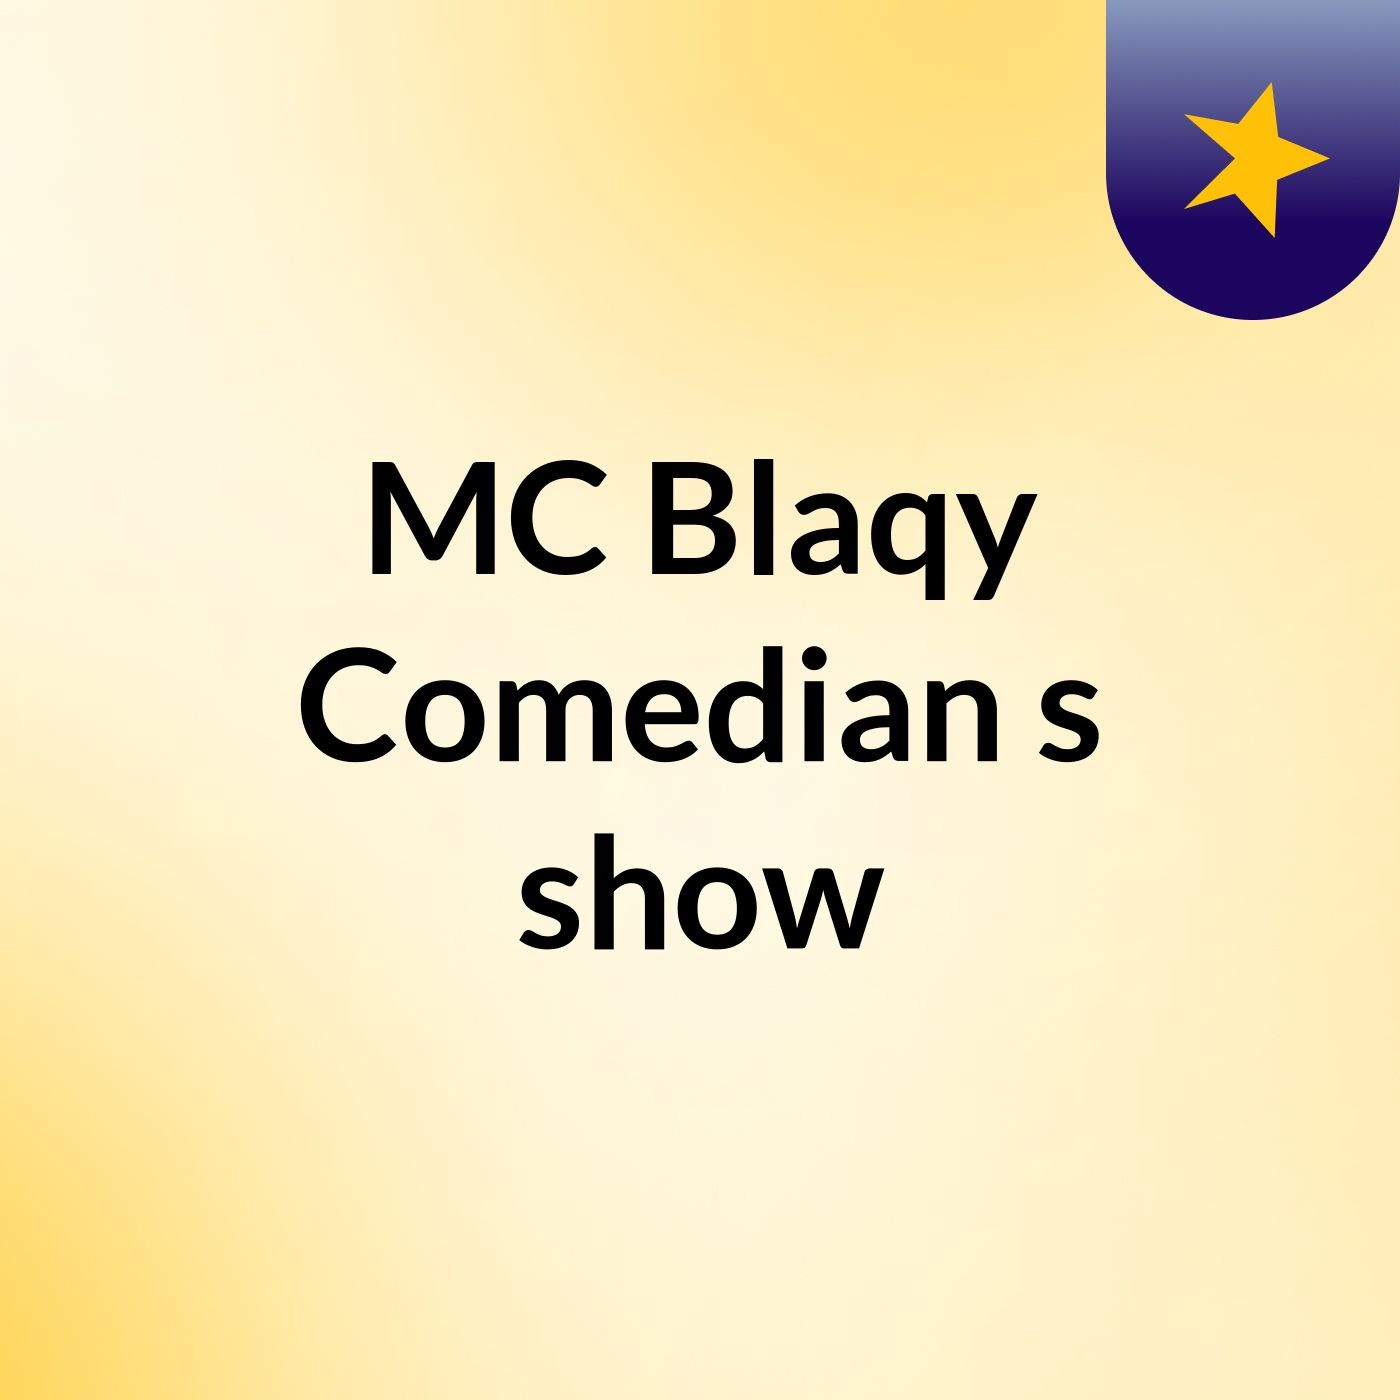 Episode 9 - MC Blaqy Comedian's show